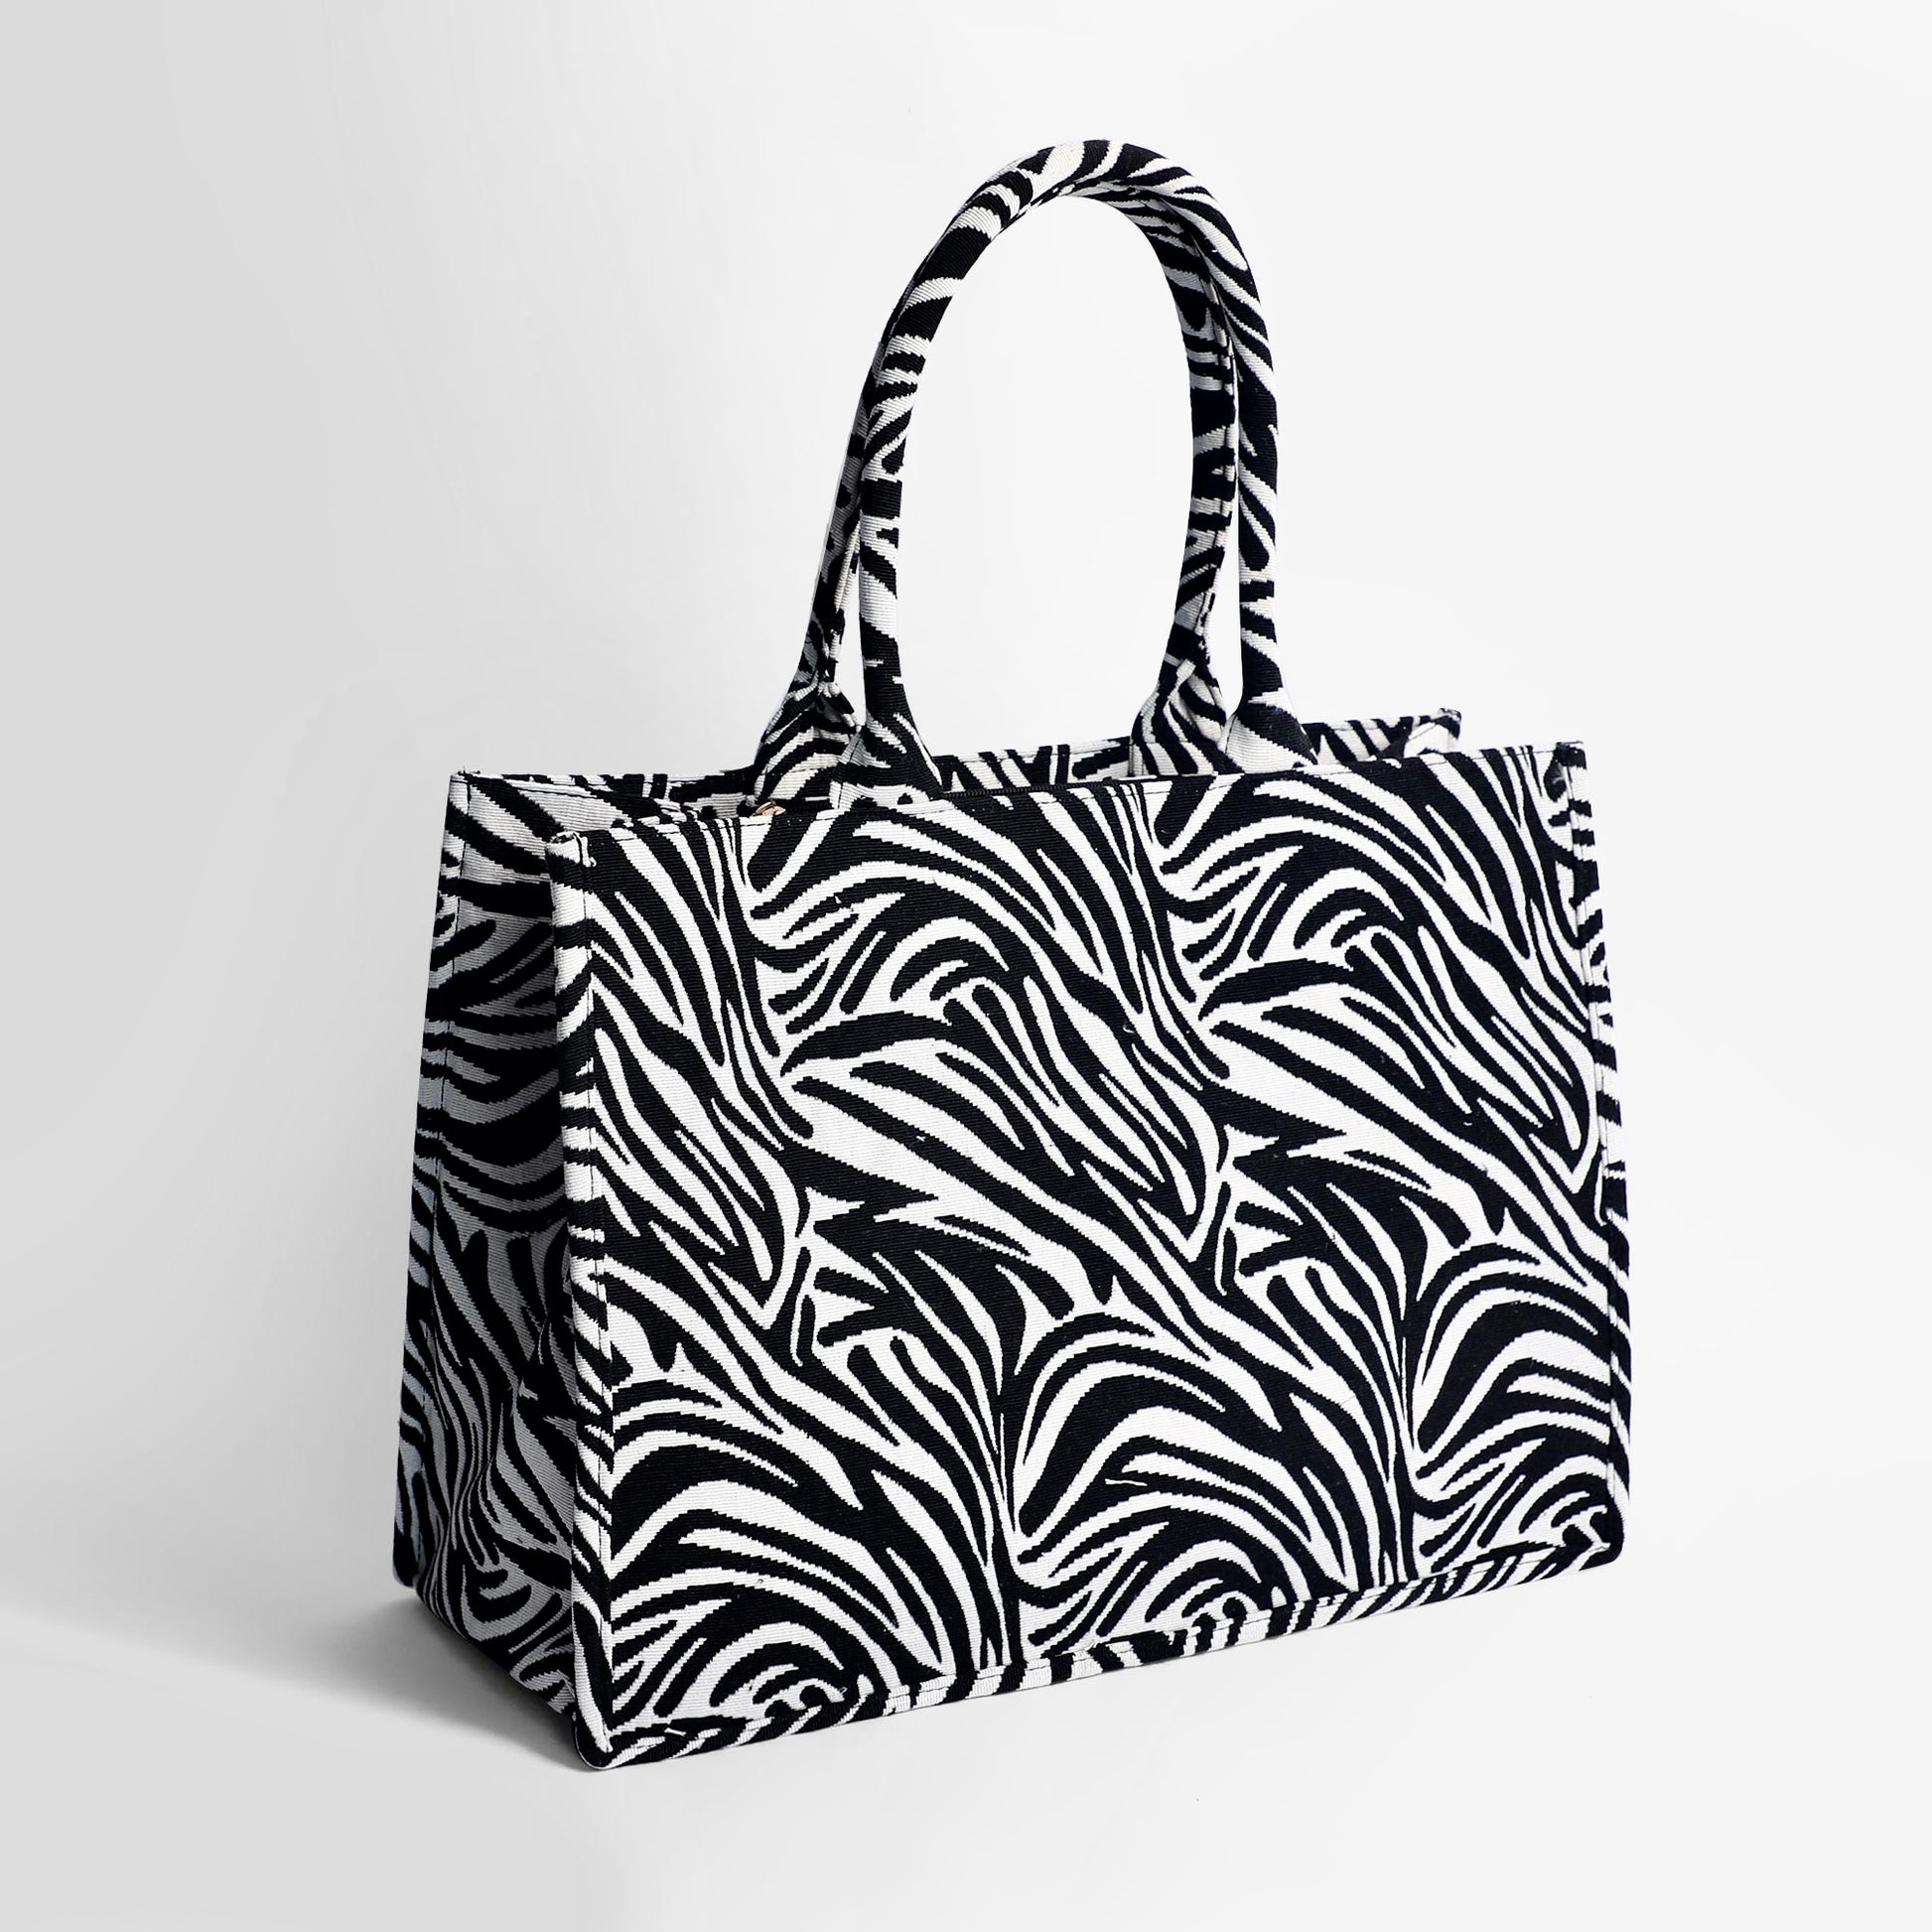 Wholesale Jute Bags Australia | Jute Bag Suppliers | Platinum Bags